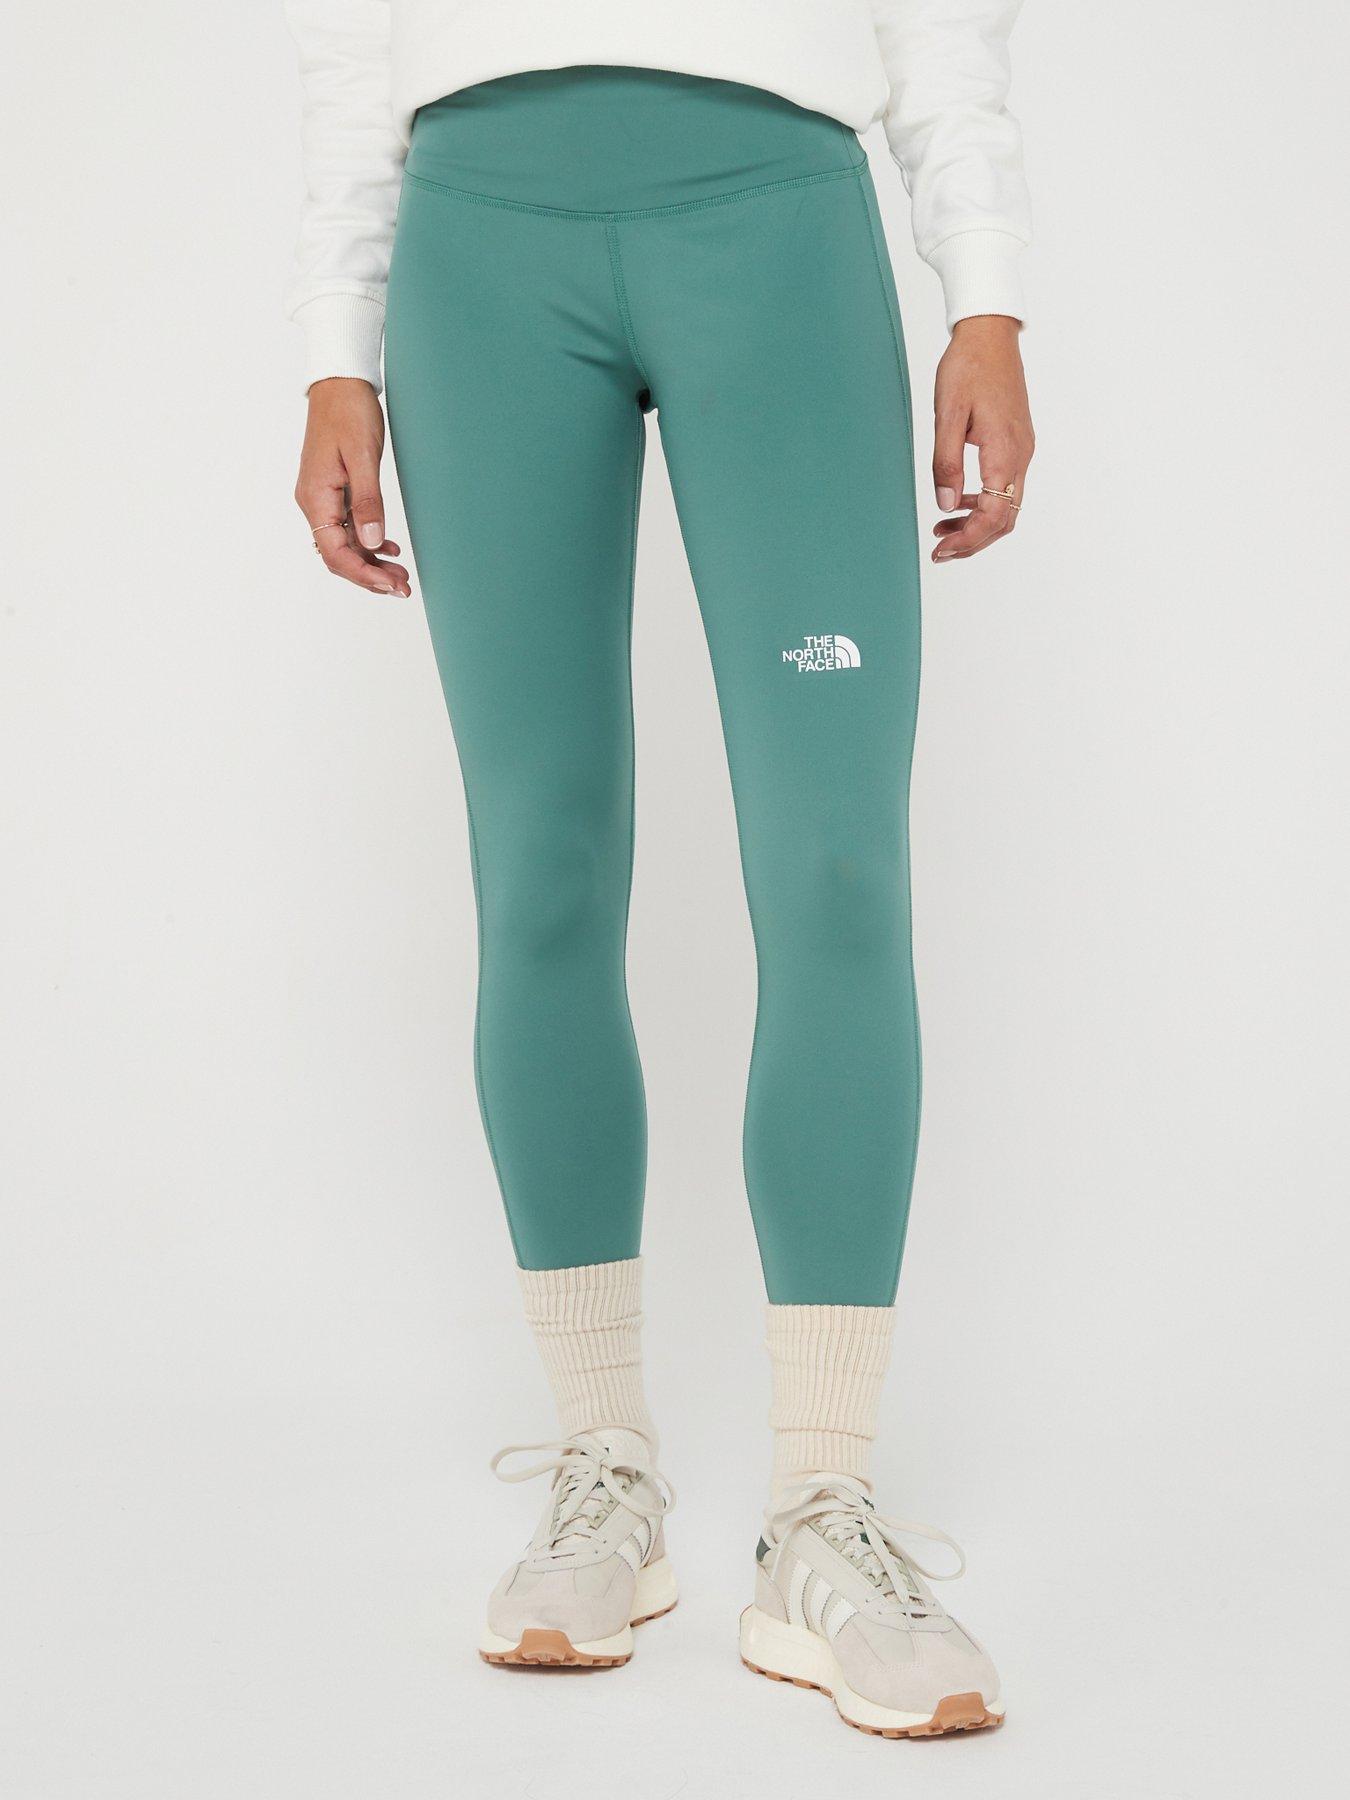 Lululemon Pocket Leggings in Army Green Size 8 (Fits UK12/14), Women's  Fashion, Activewear on Carousell